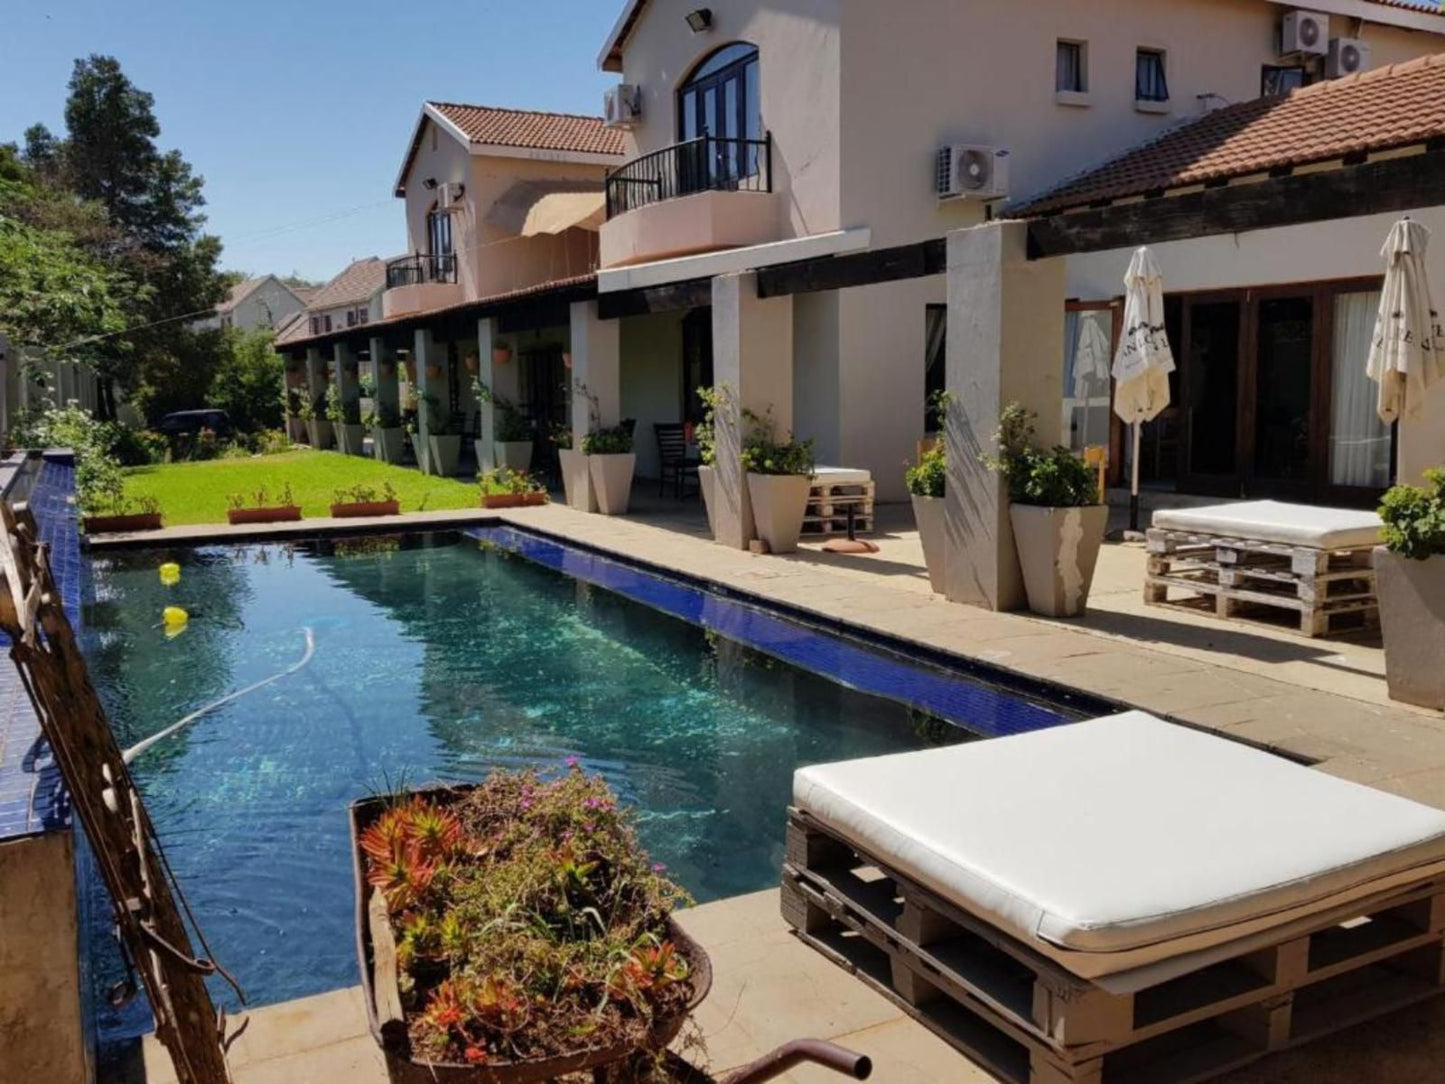 Olympus Manor Faerie Glen Pretoria Tshwane Gauteng South Africa House, Building, Architecture, Swimming Pool